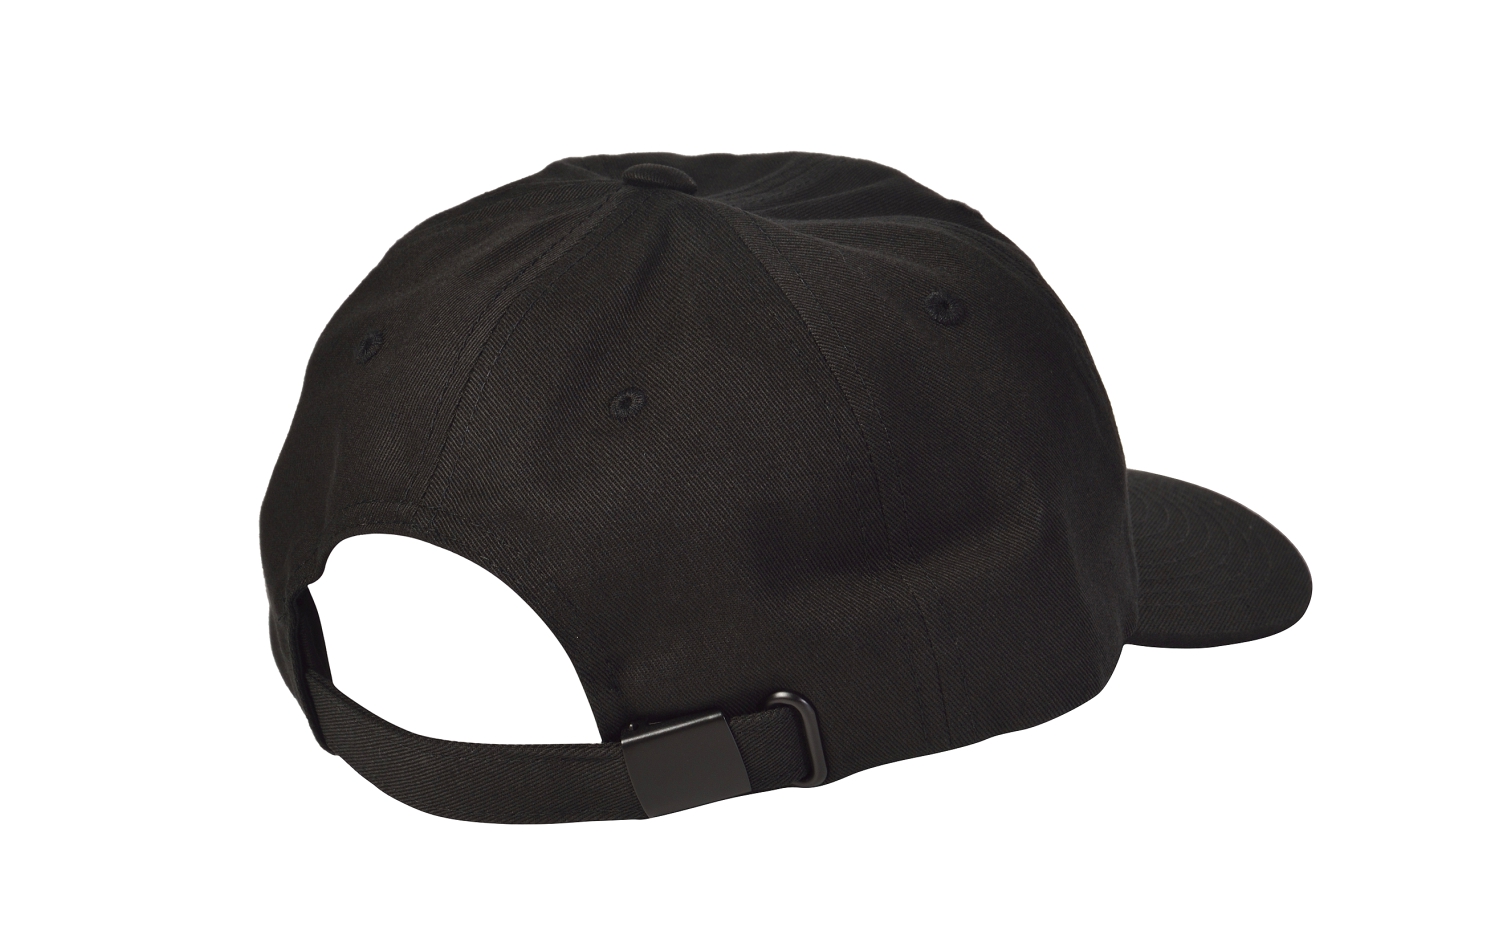 Supra Label Slider Hat (C3039-008)